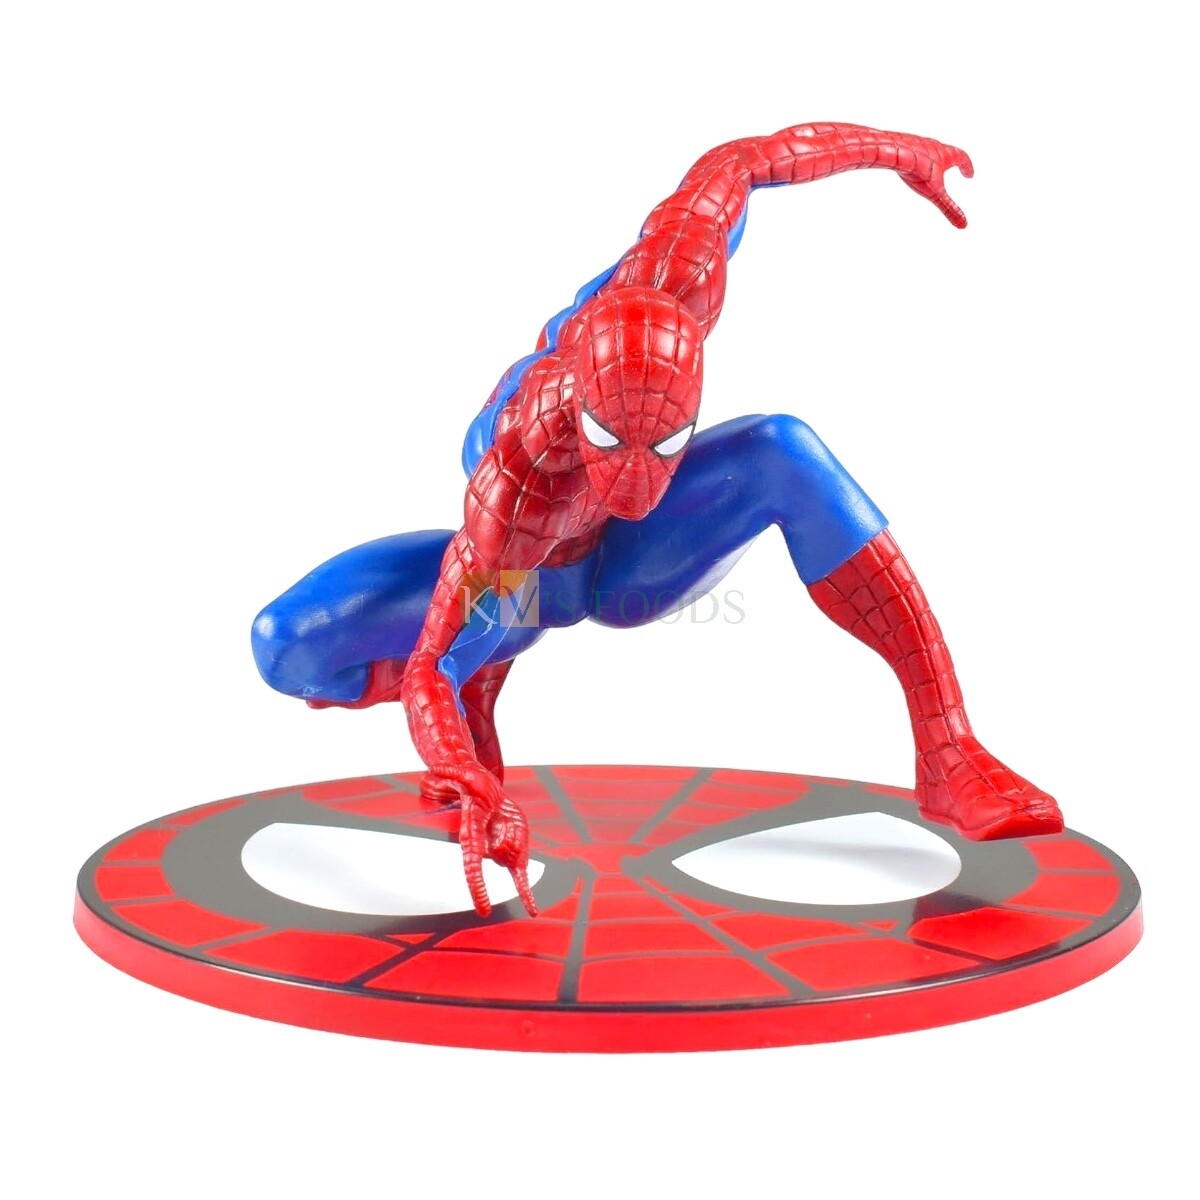 1PC Jumbo Large Big Marvel Super Hero Spiderman Action Figures Model Toy Spider Man Cake Topper Decoration, Miniature Figurine, Gift Children's Play Toys, Desktop Decoration